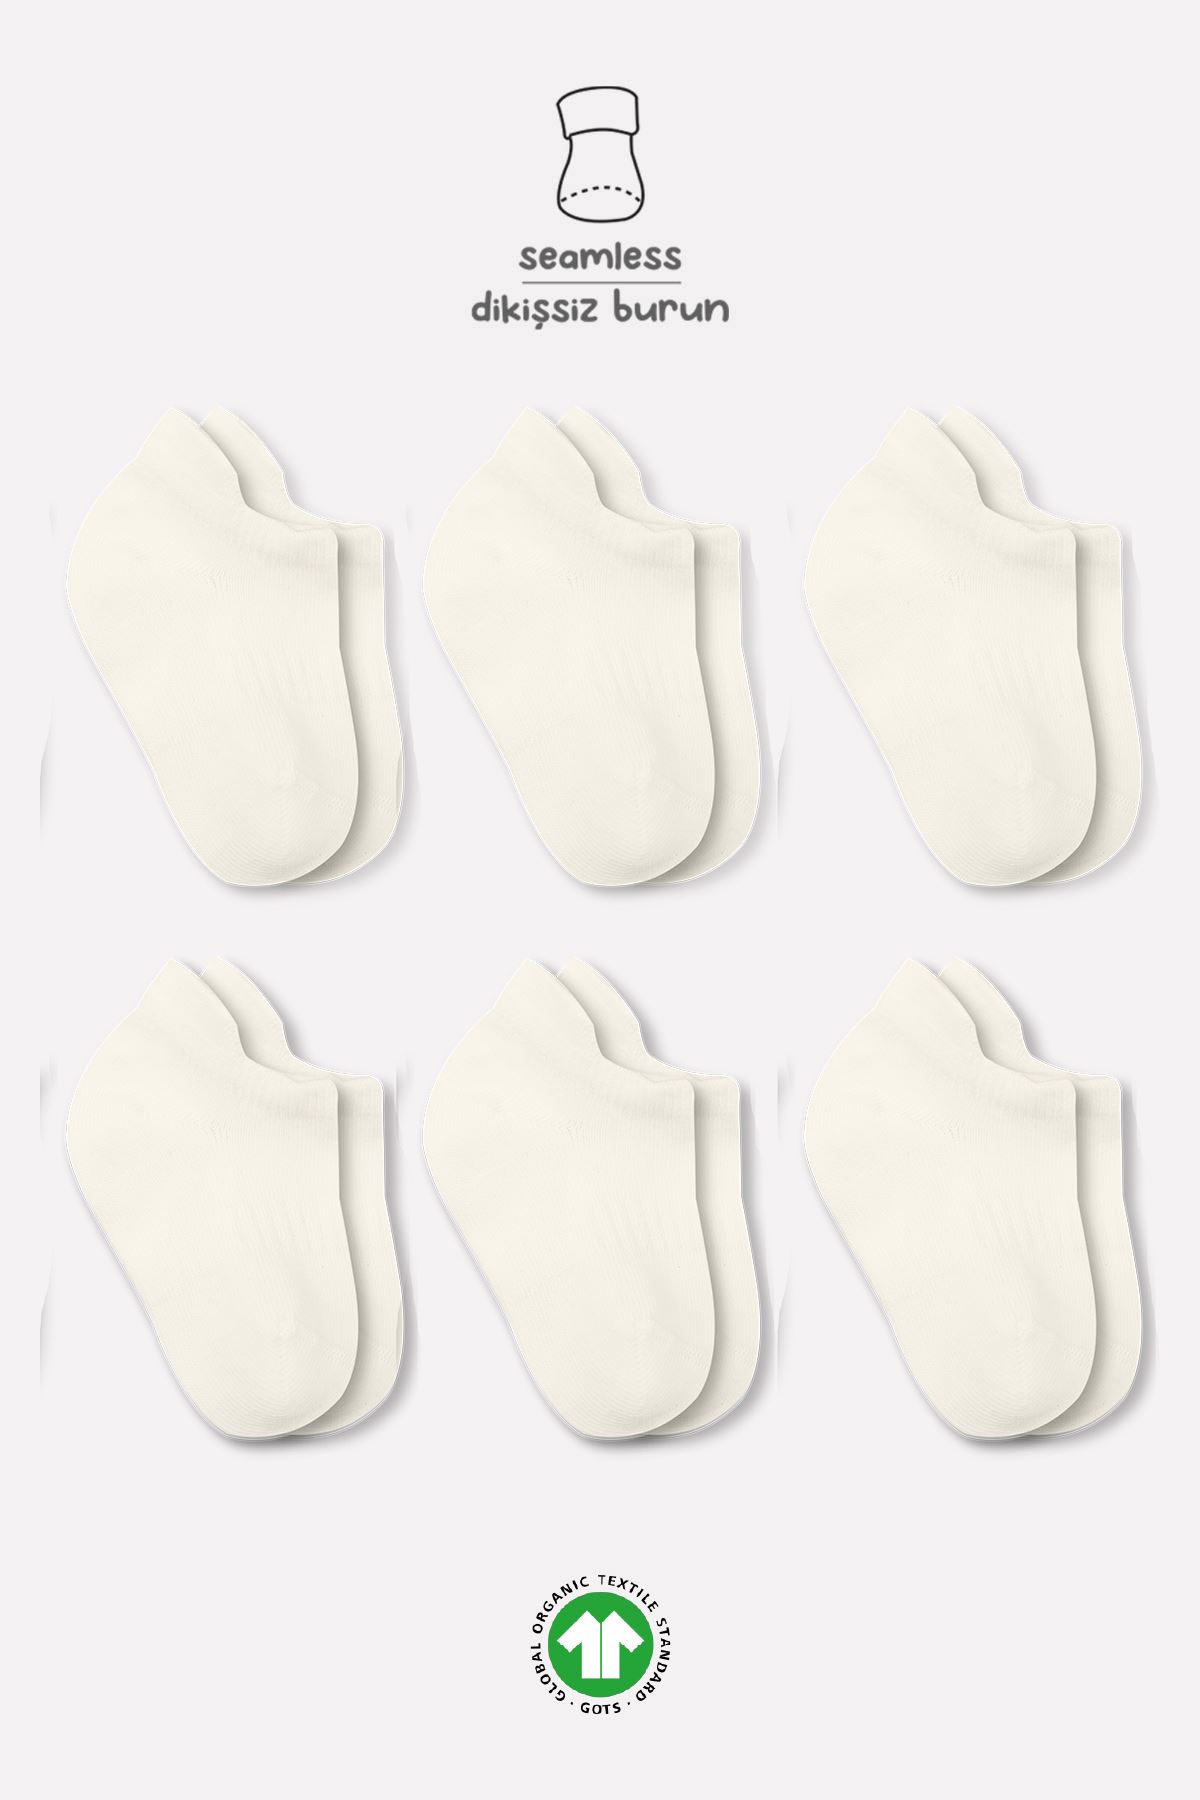 Bistyle 6lı Basic Sneakers Soket Çorap 6109 Ekru